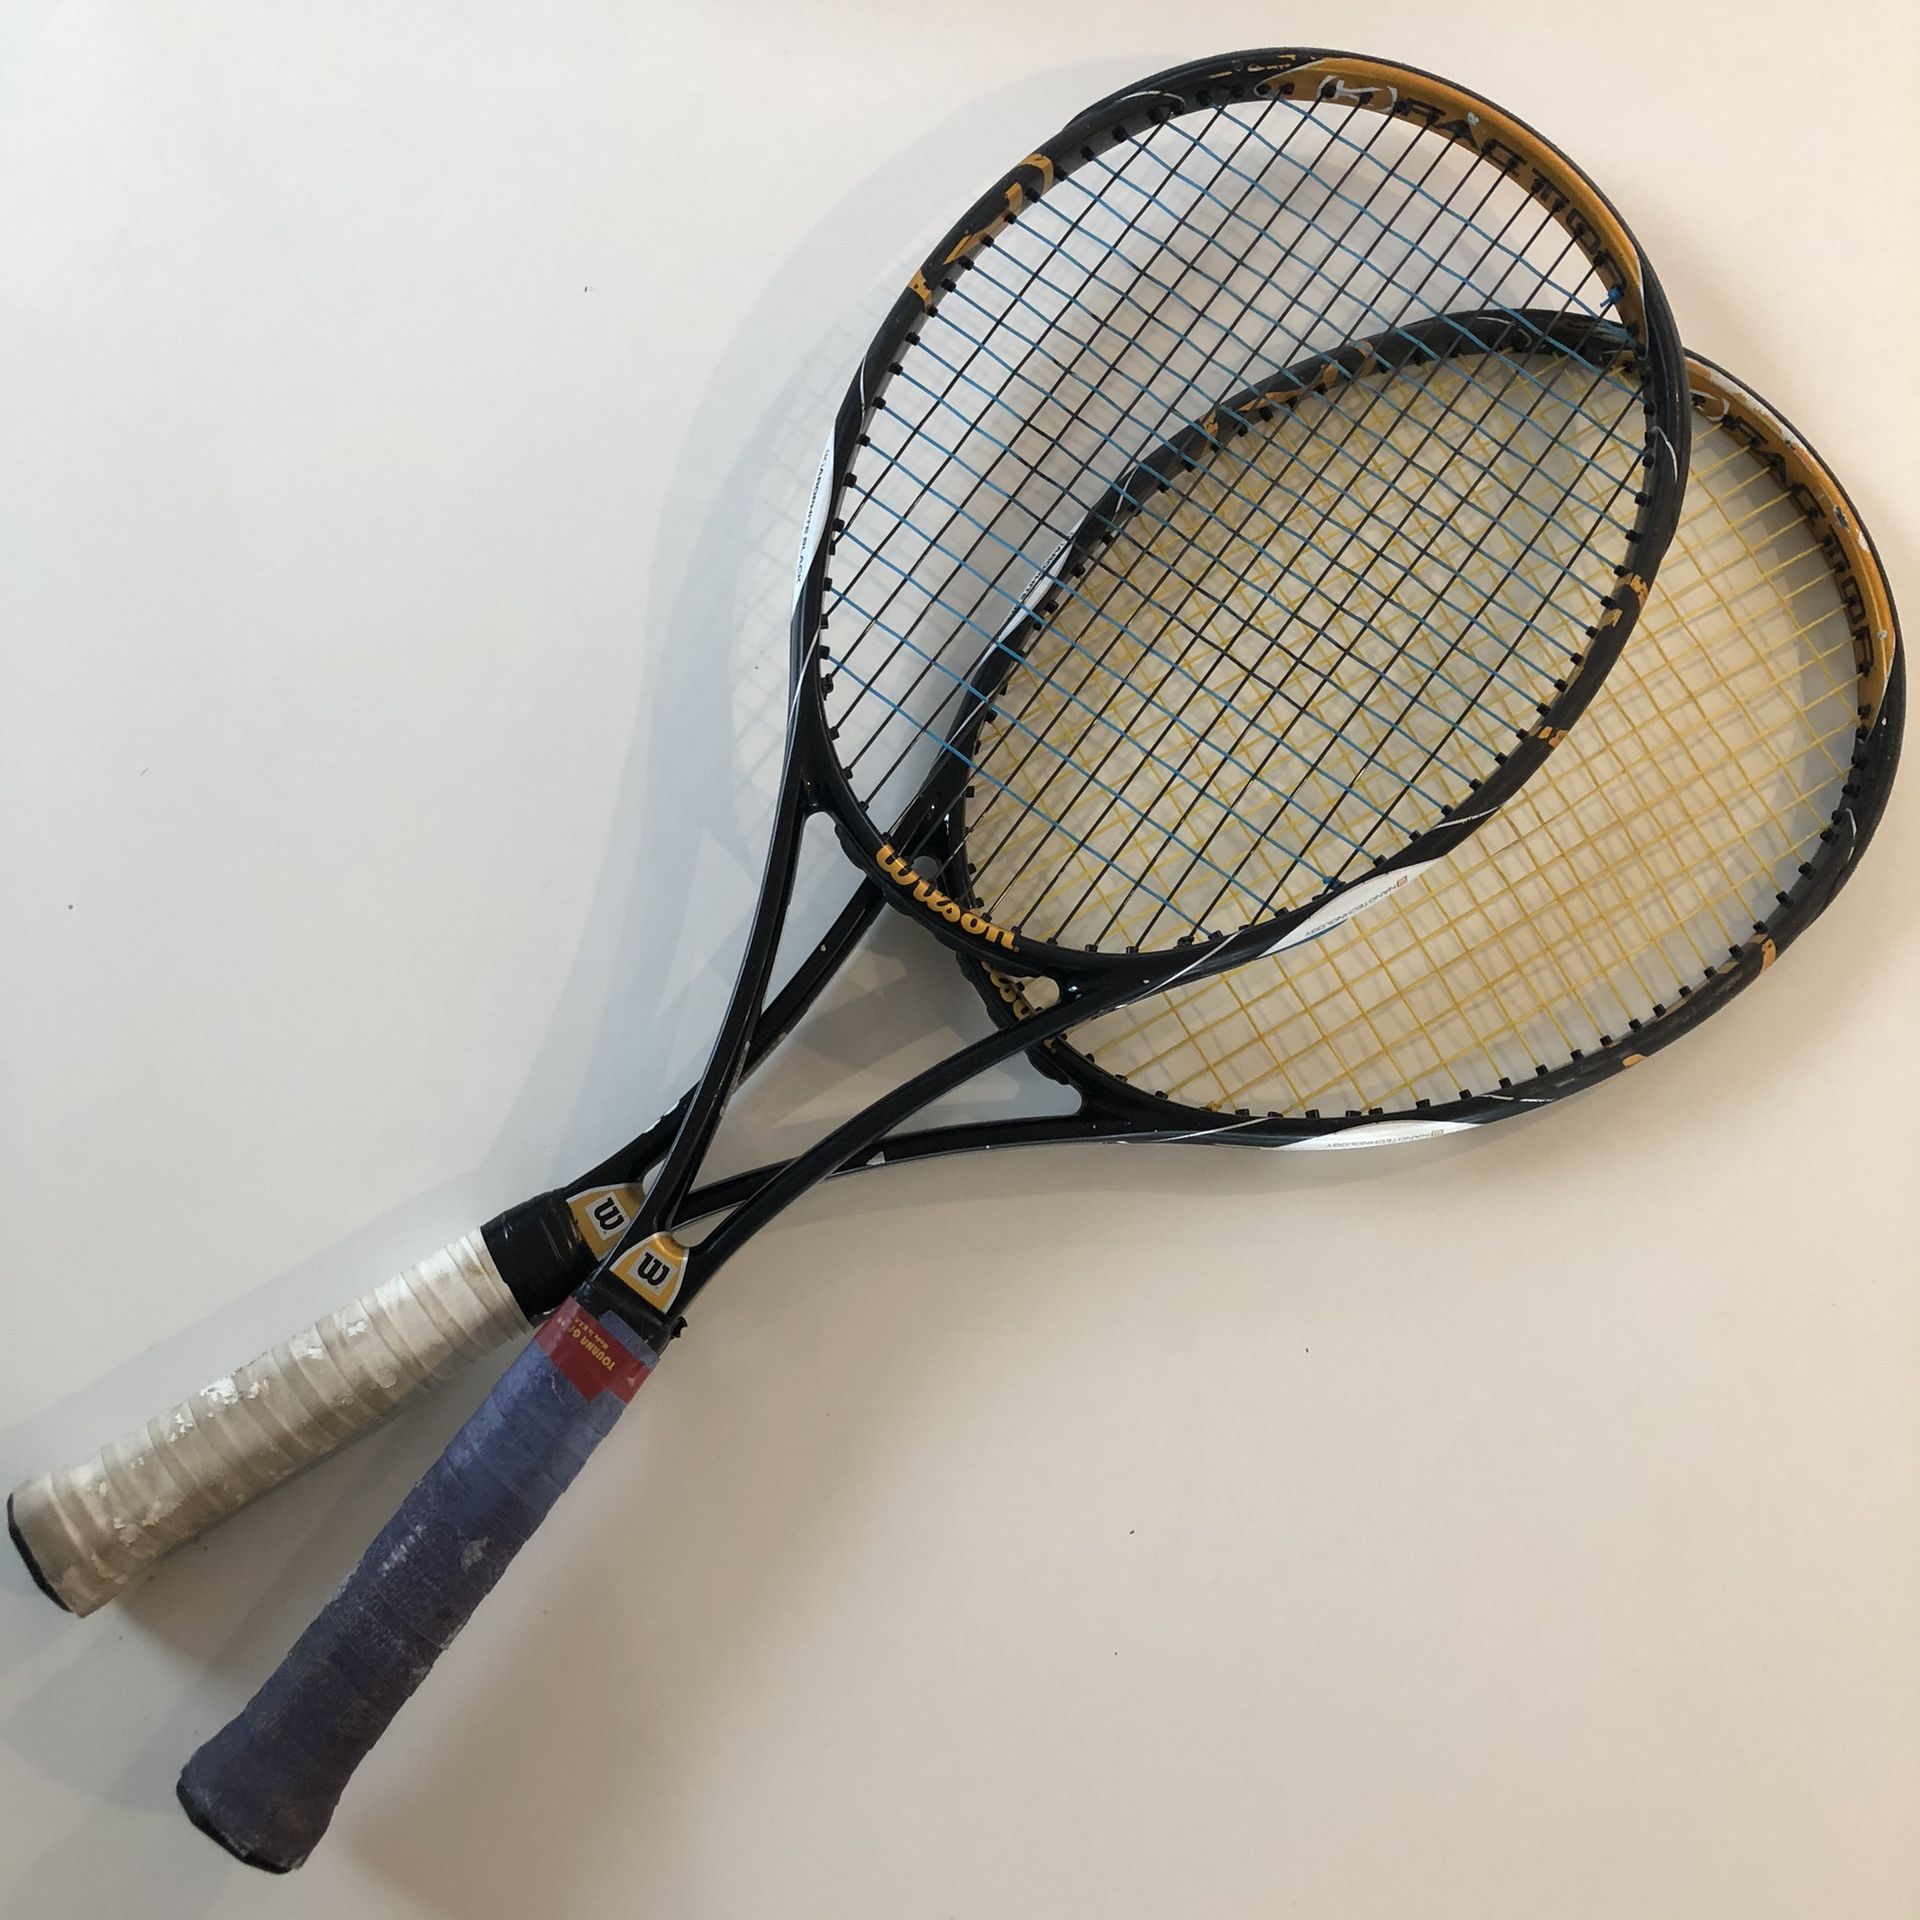 2 Wilson K Blade 98 Tennis Racquets L3 4 3/8” 18x20